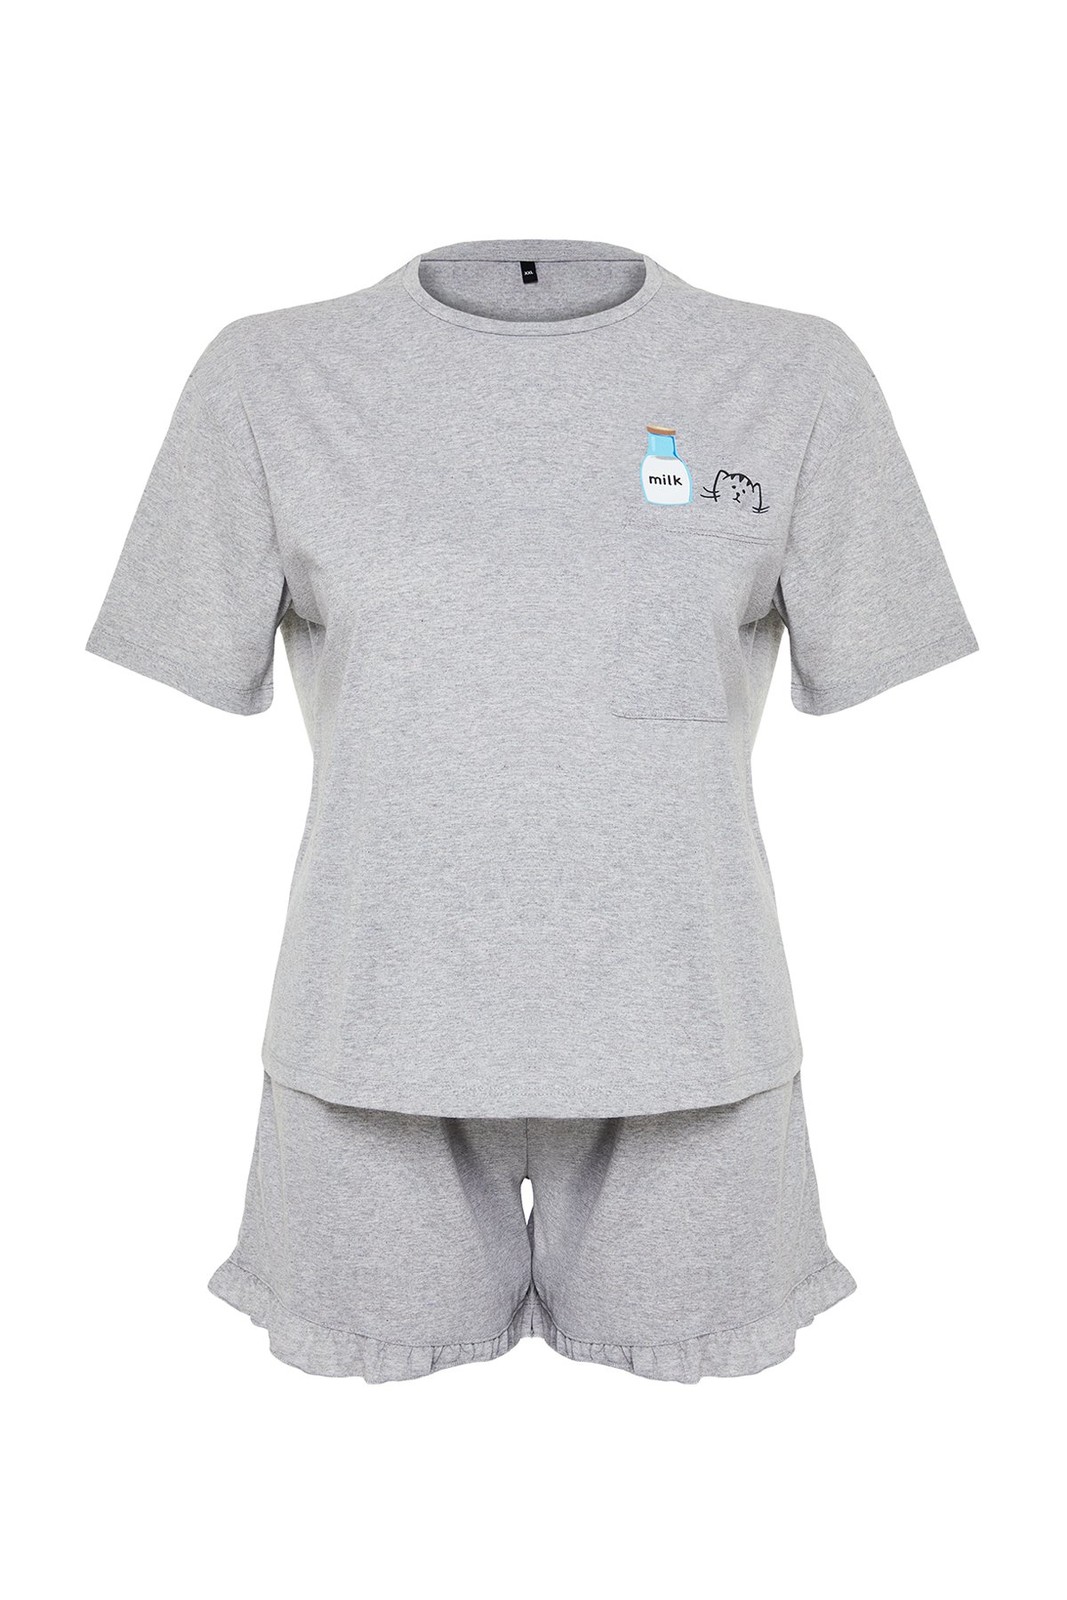 Trendyol Curve Gray Single Jersey Knitted Plus Size Pajamas Set